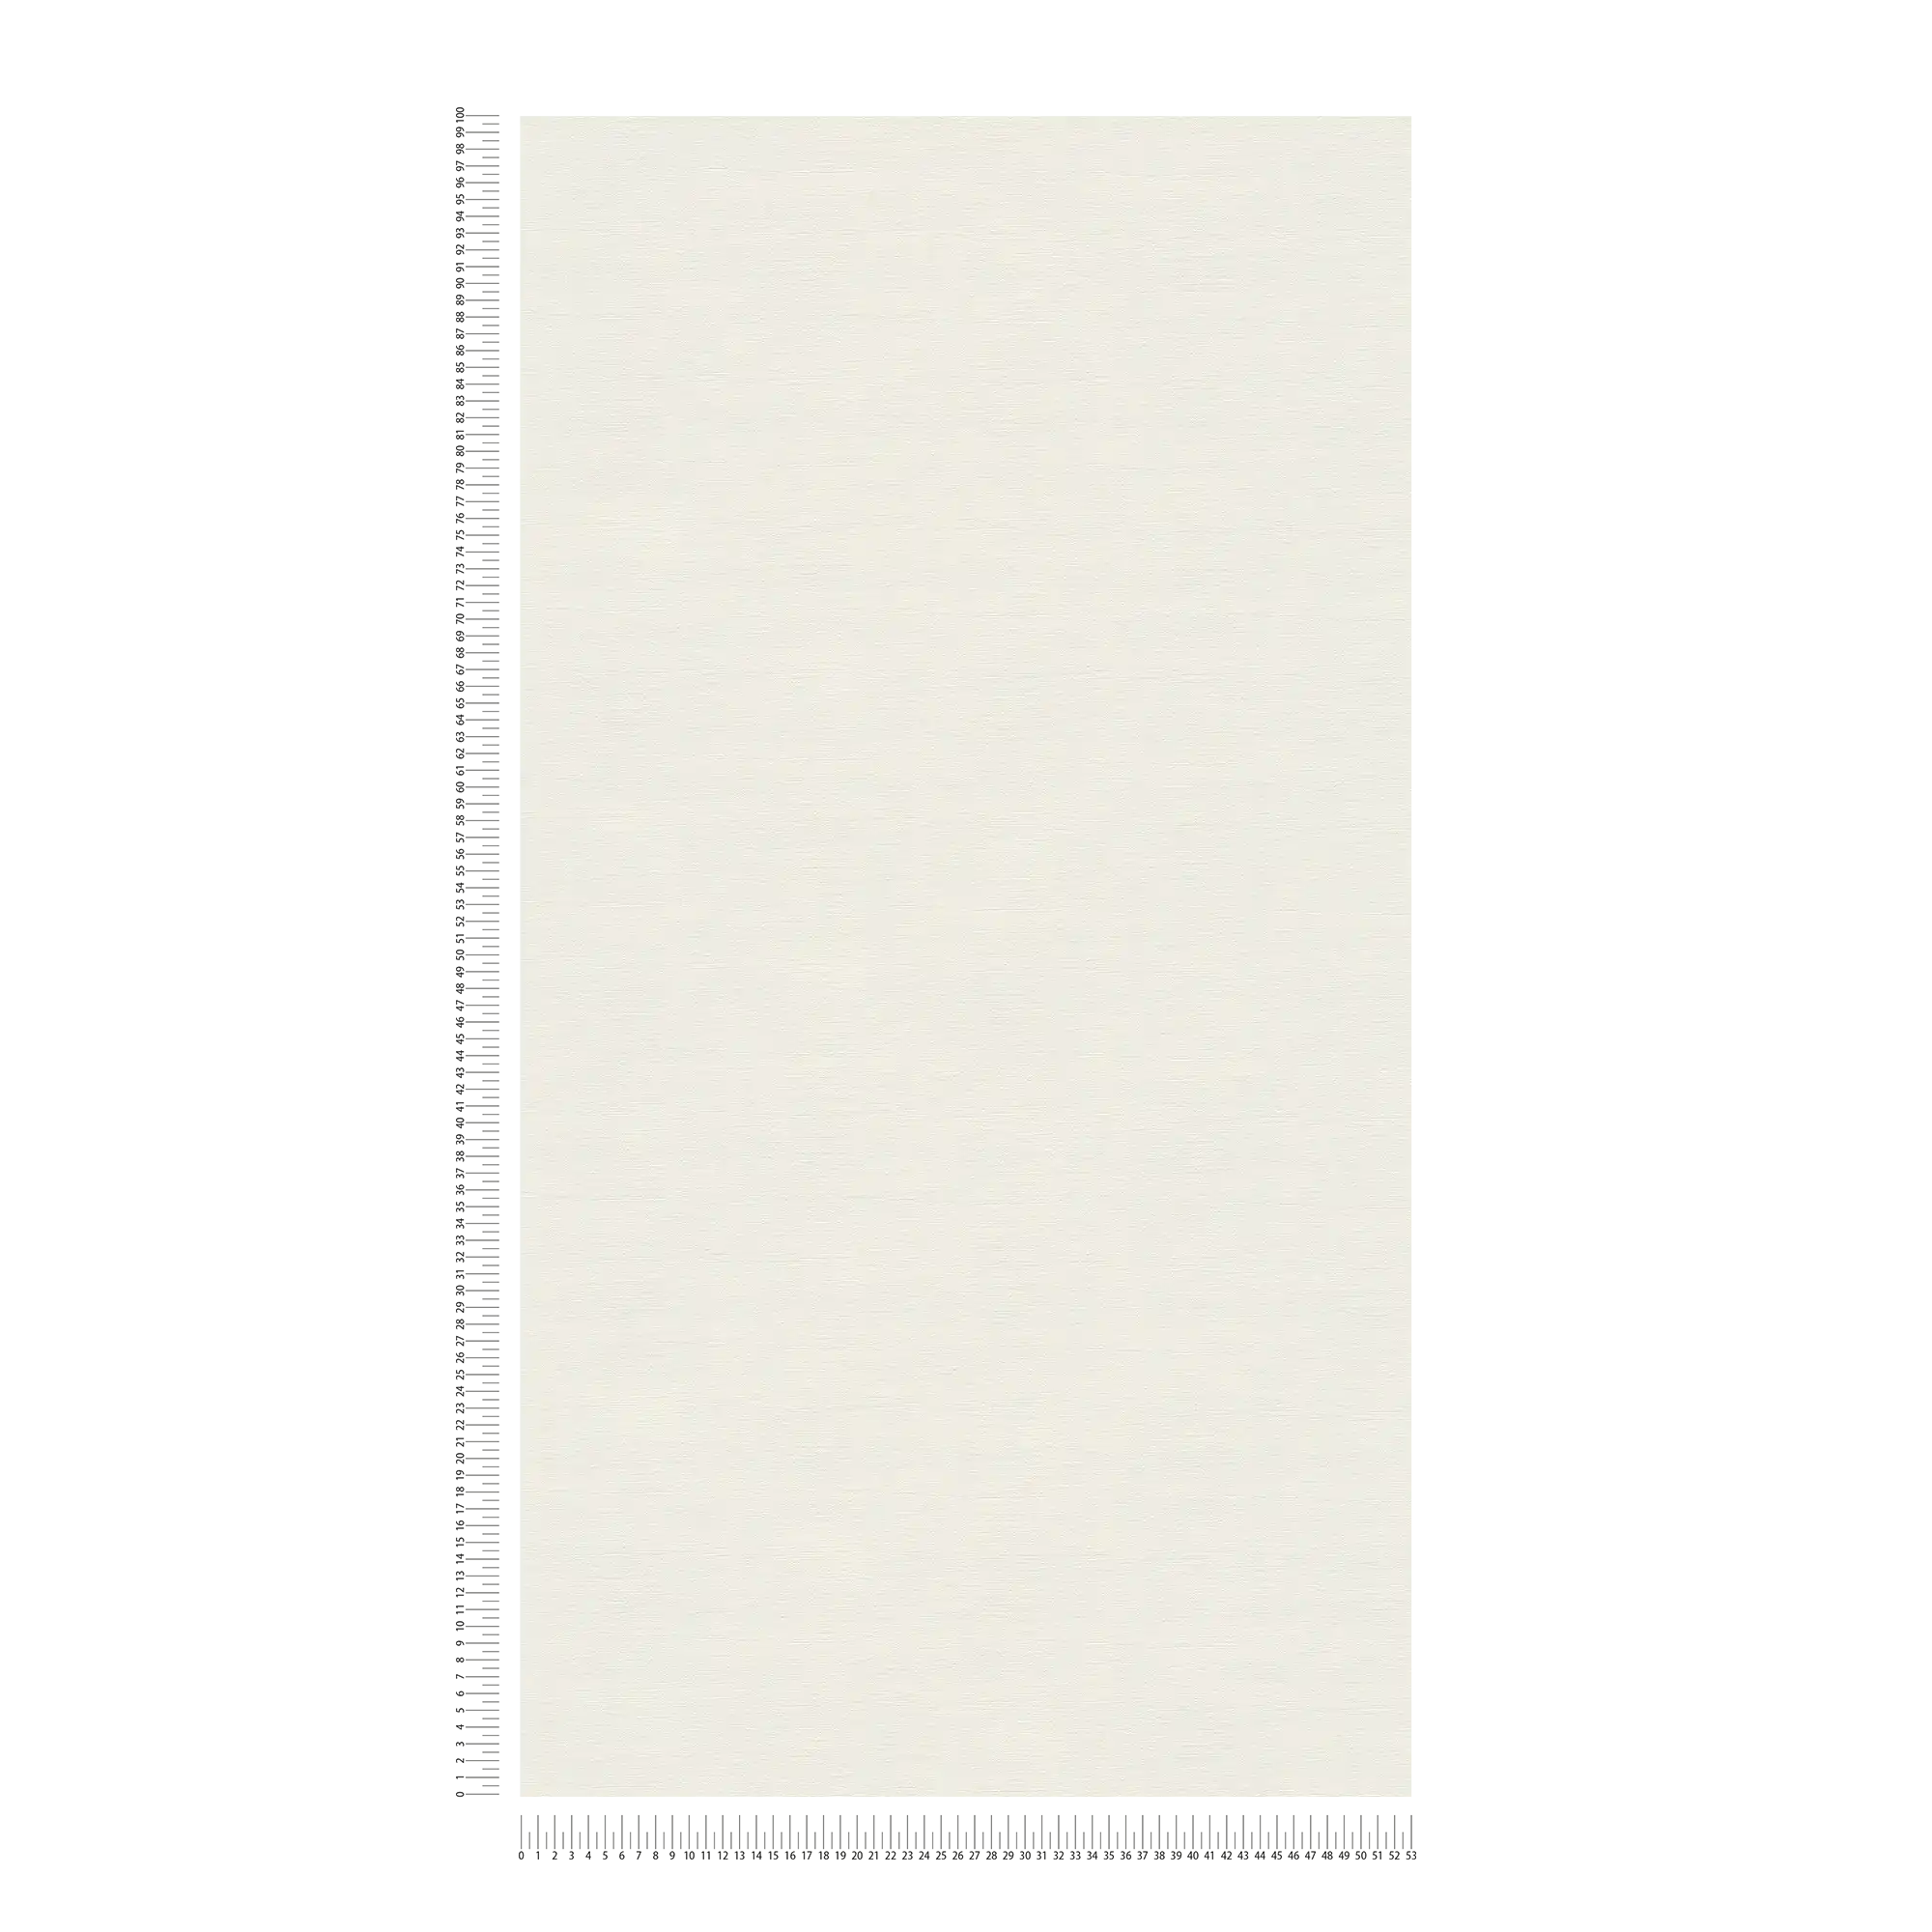             Carta da parati in tessuto non tessuto a tinta unita con leggera lucentezza - bianco
        